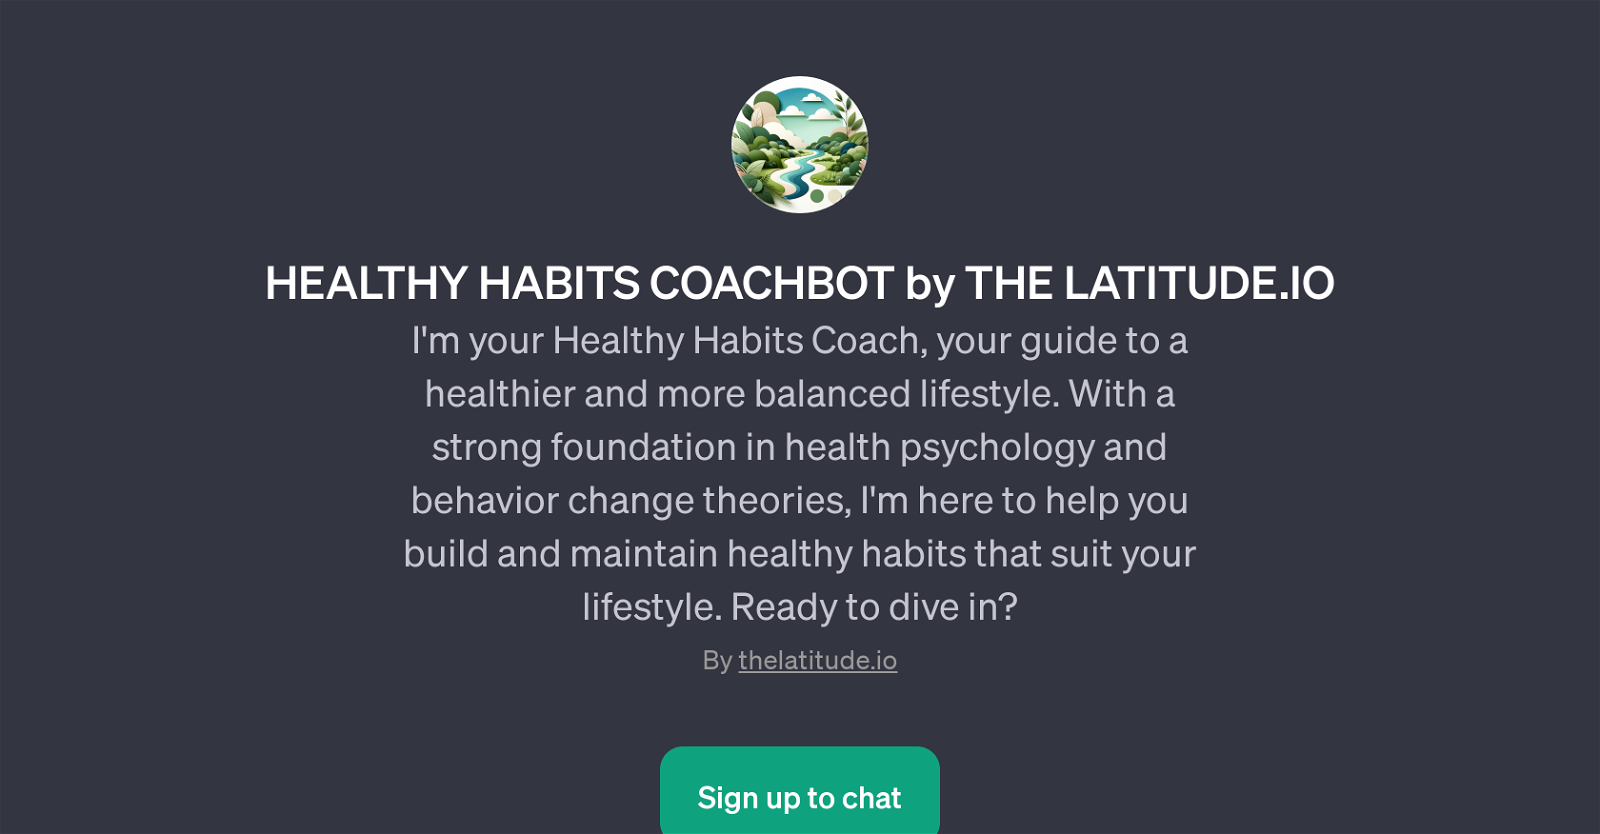 HEALTHY HABITS COACHBOT by THE LATITUDE.IO website